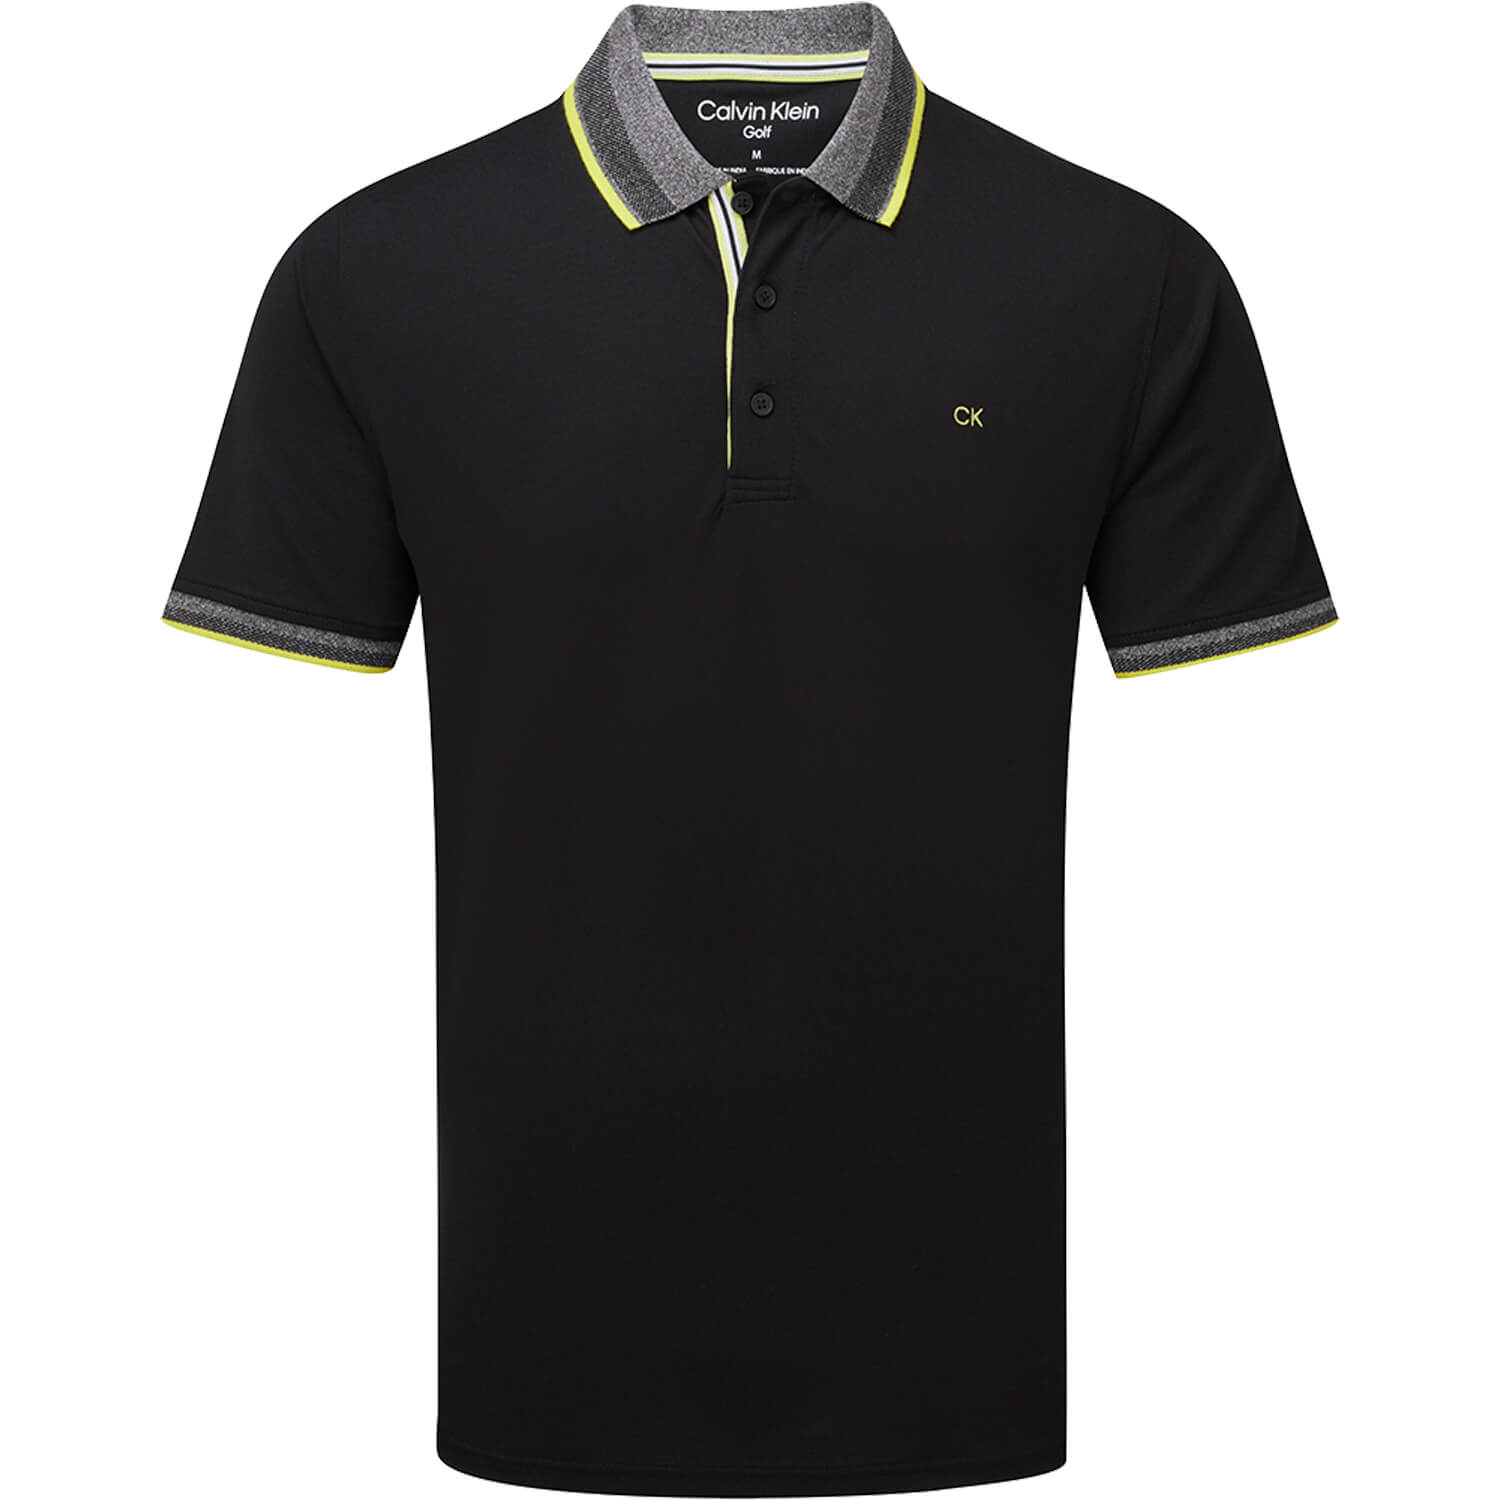 Calvin Klein Golf Poloshirt Spark schwarz